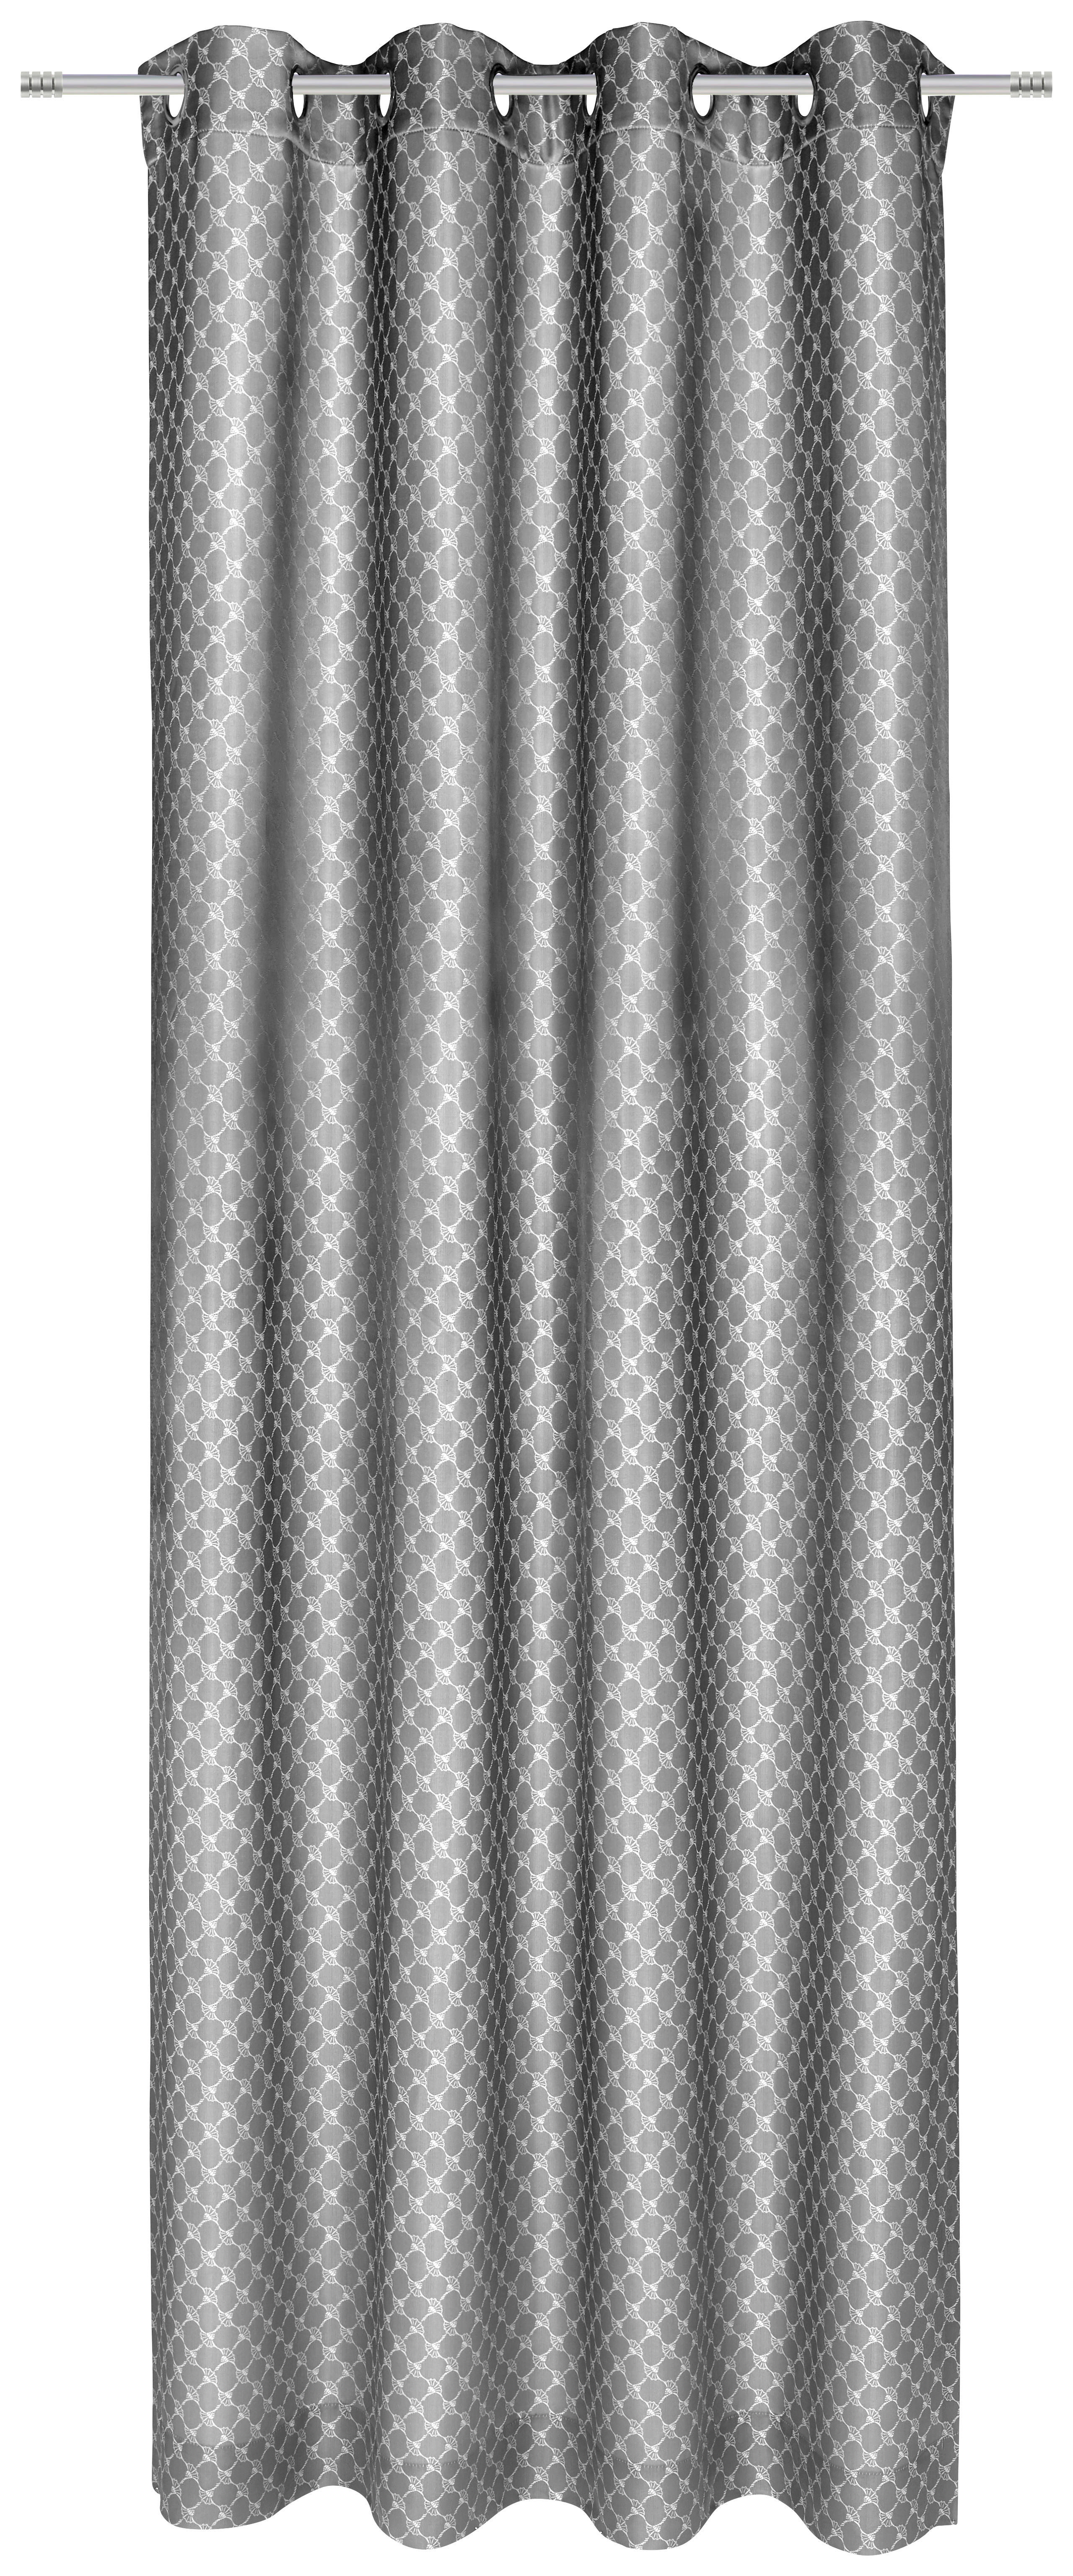 ÖSENSCHAL Allover blickdicht 140/250 cm   - Silberfarben/Hellgrau, Design, Textil (140/250cm) - Joop!